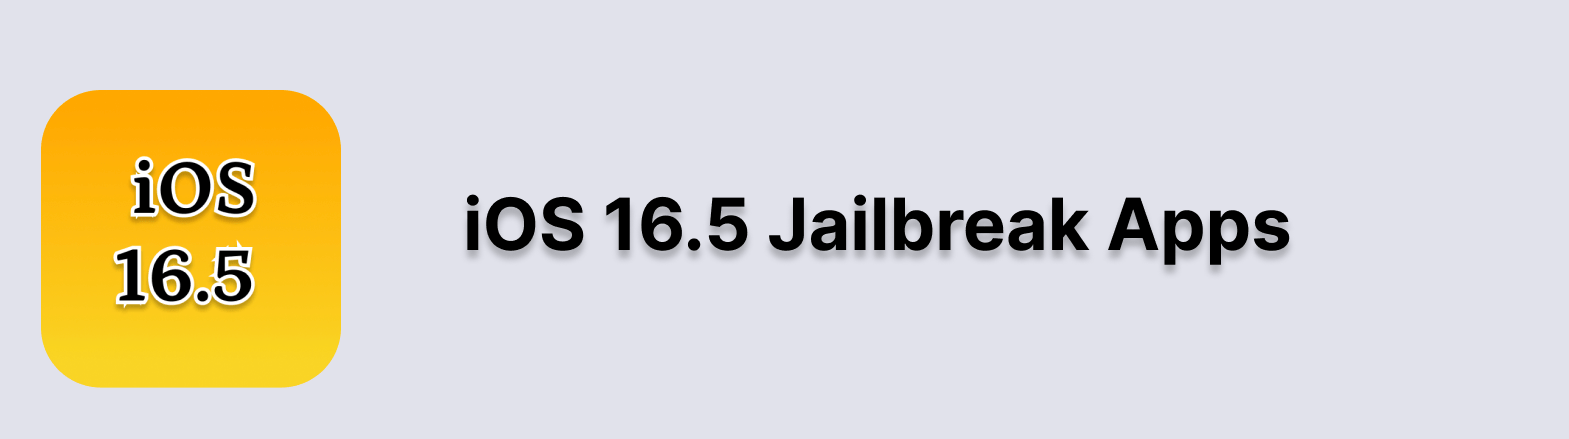 iOS 16.5 Jailbreak apps